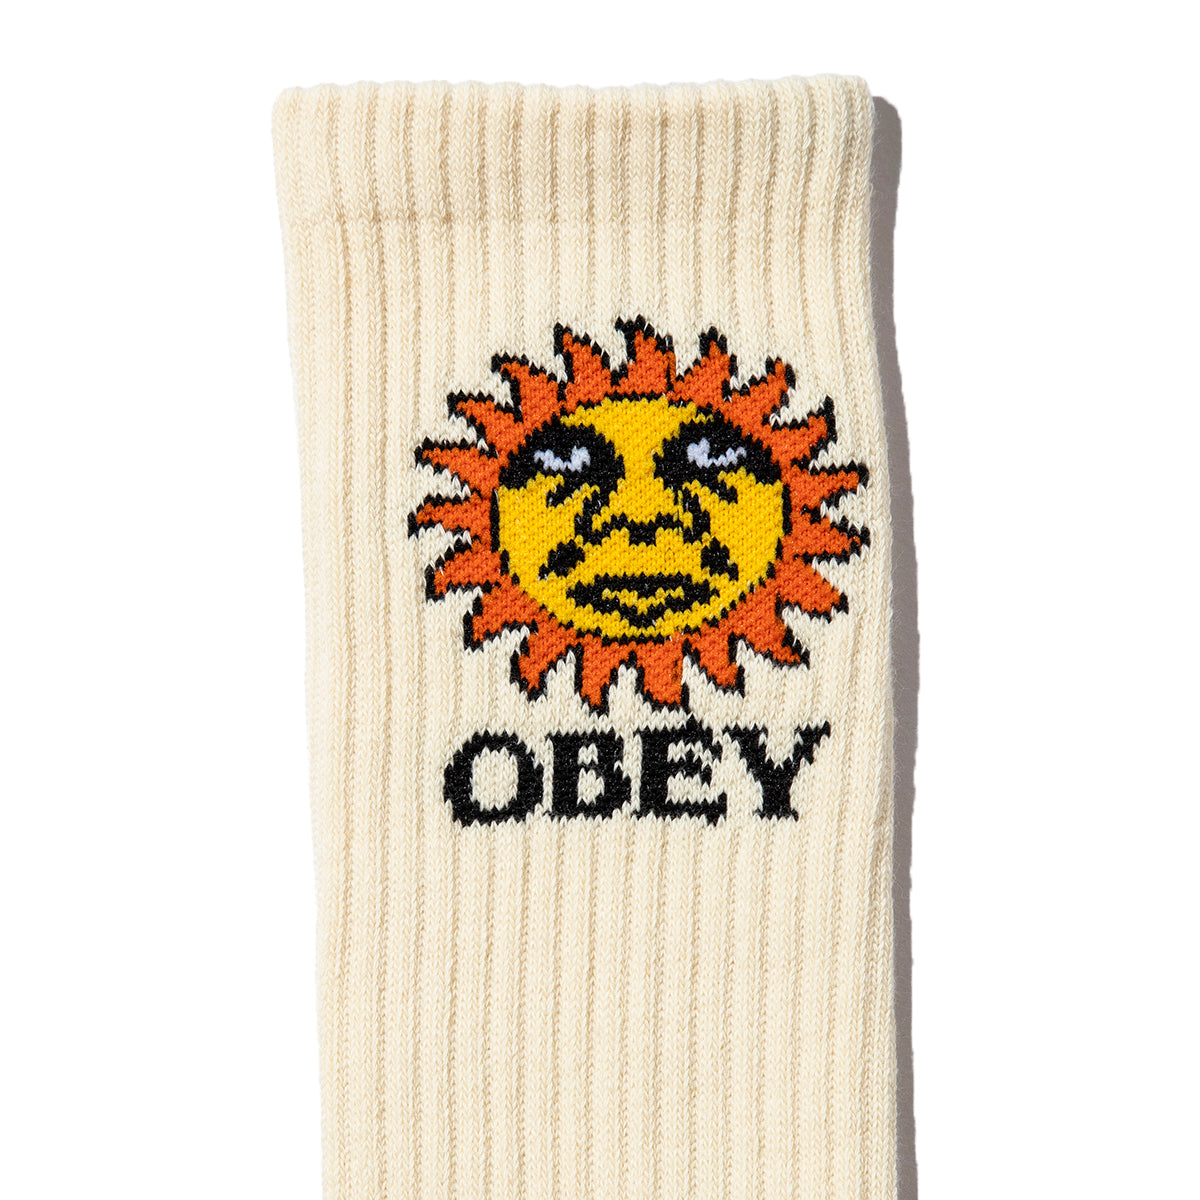 OBEY SUNSHINE SOCKS